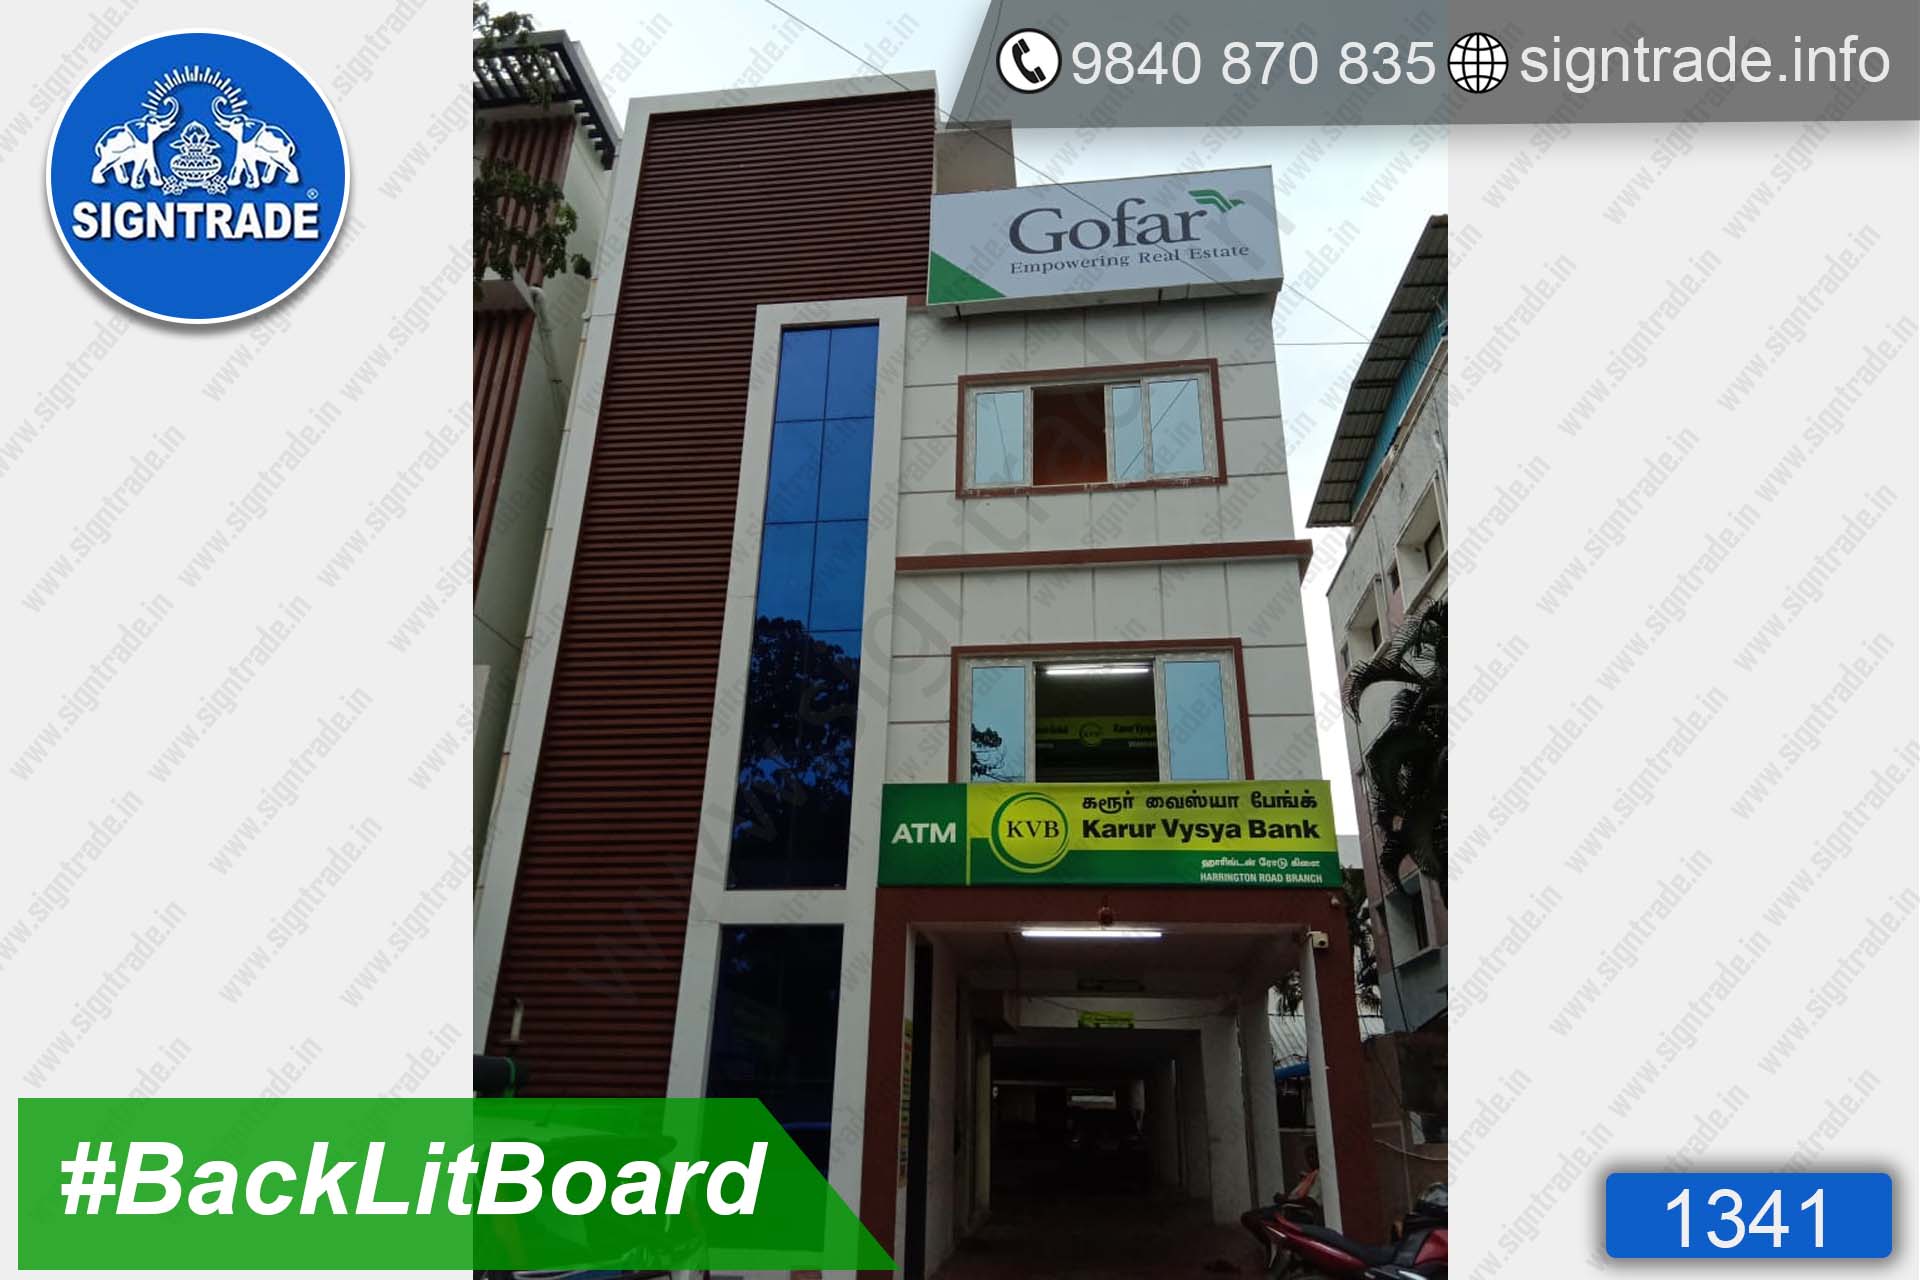 Gofar - Empowering Real Estate - Chennai - SIGNTRADE - BackLit Flex Board Manufacturers in Chennai